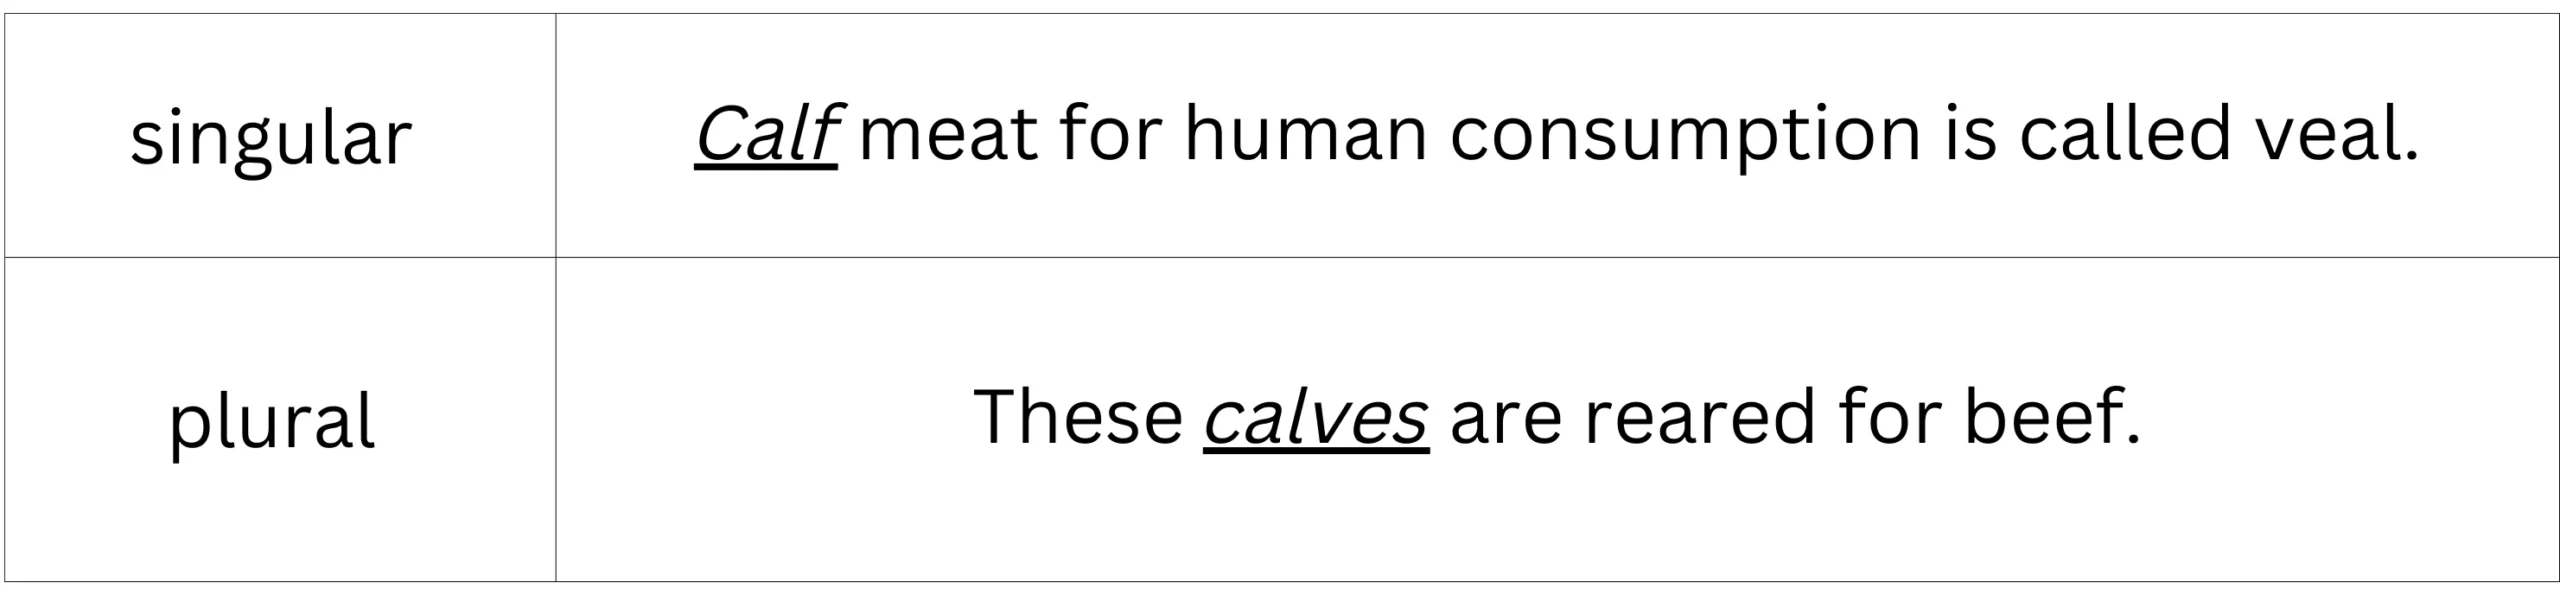 Calf and calves (singular and plural)